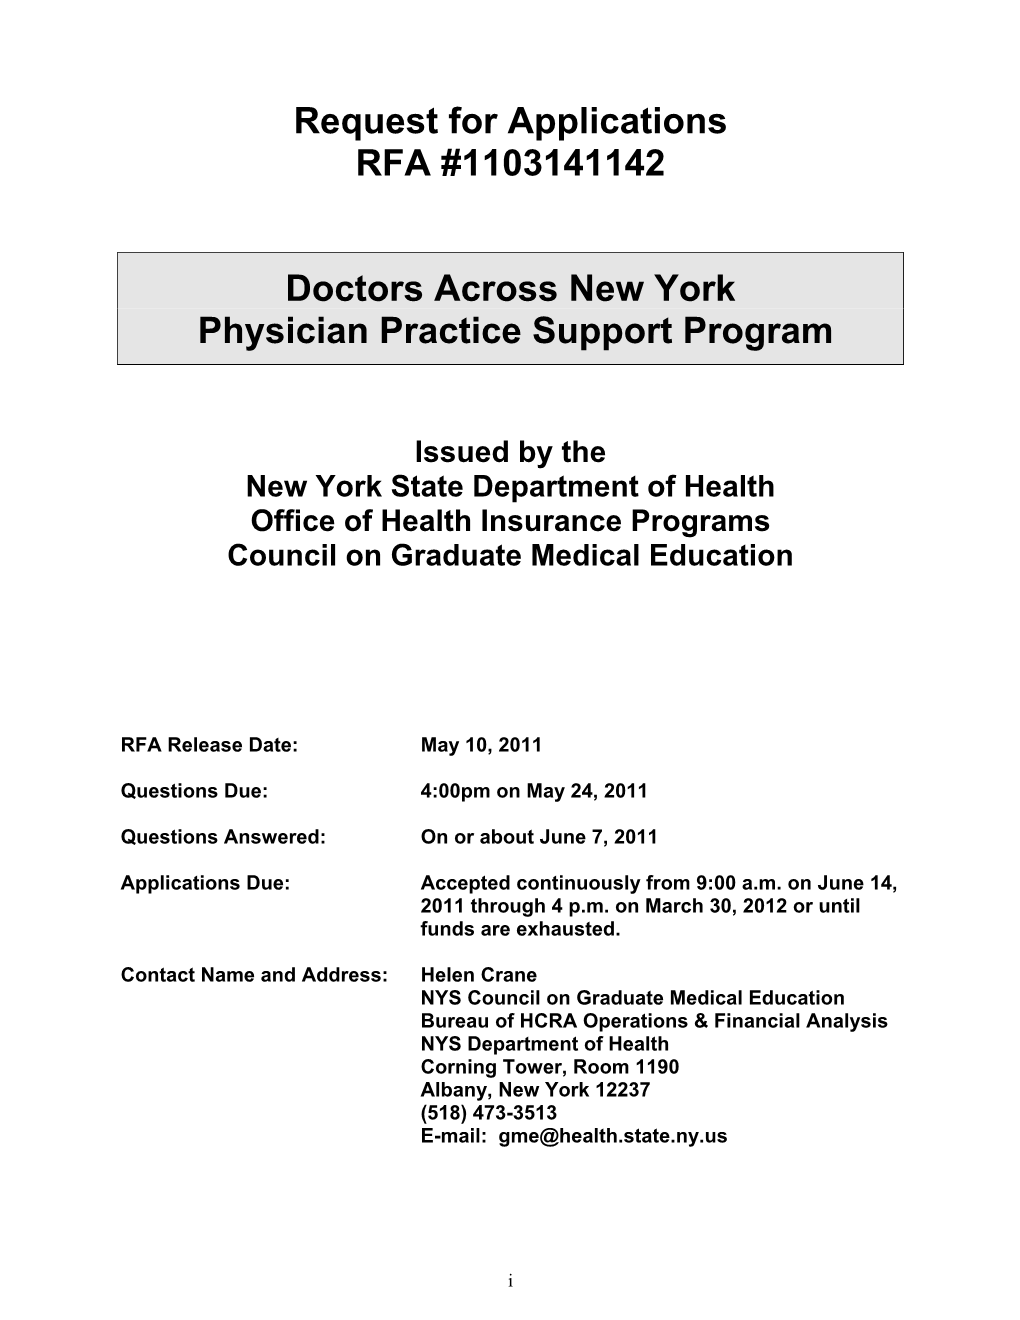 Doctors Across New York Physician Practice Support Program